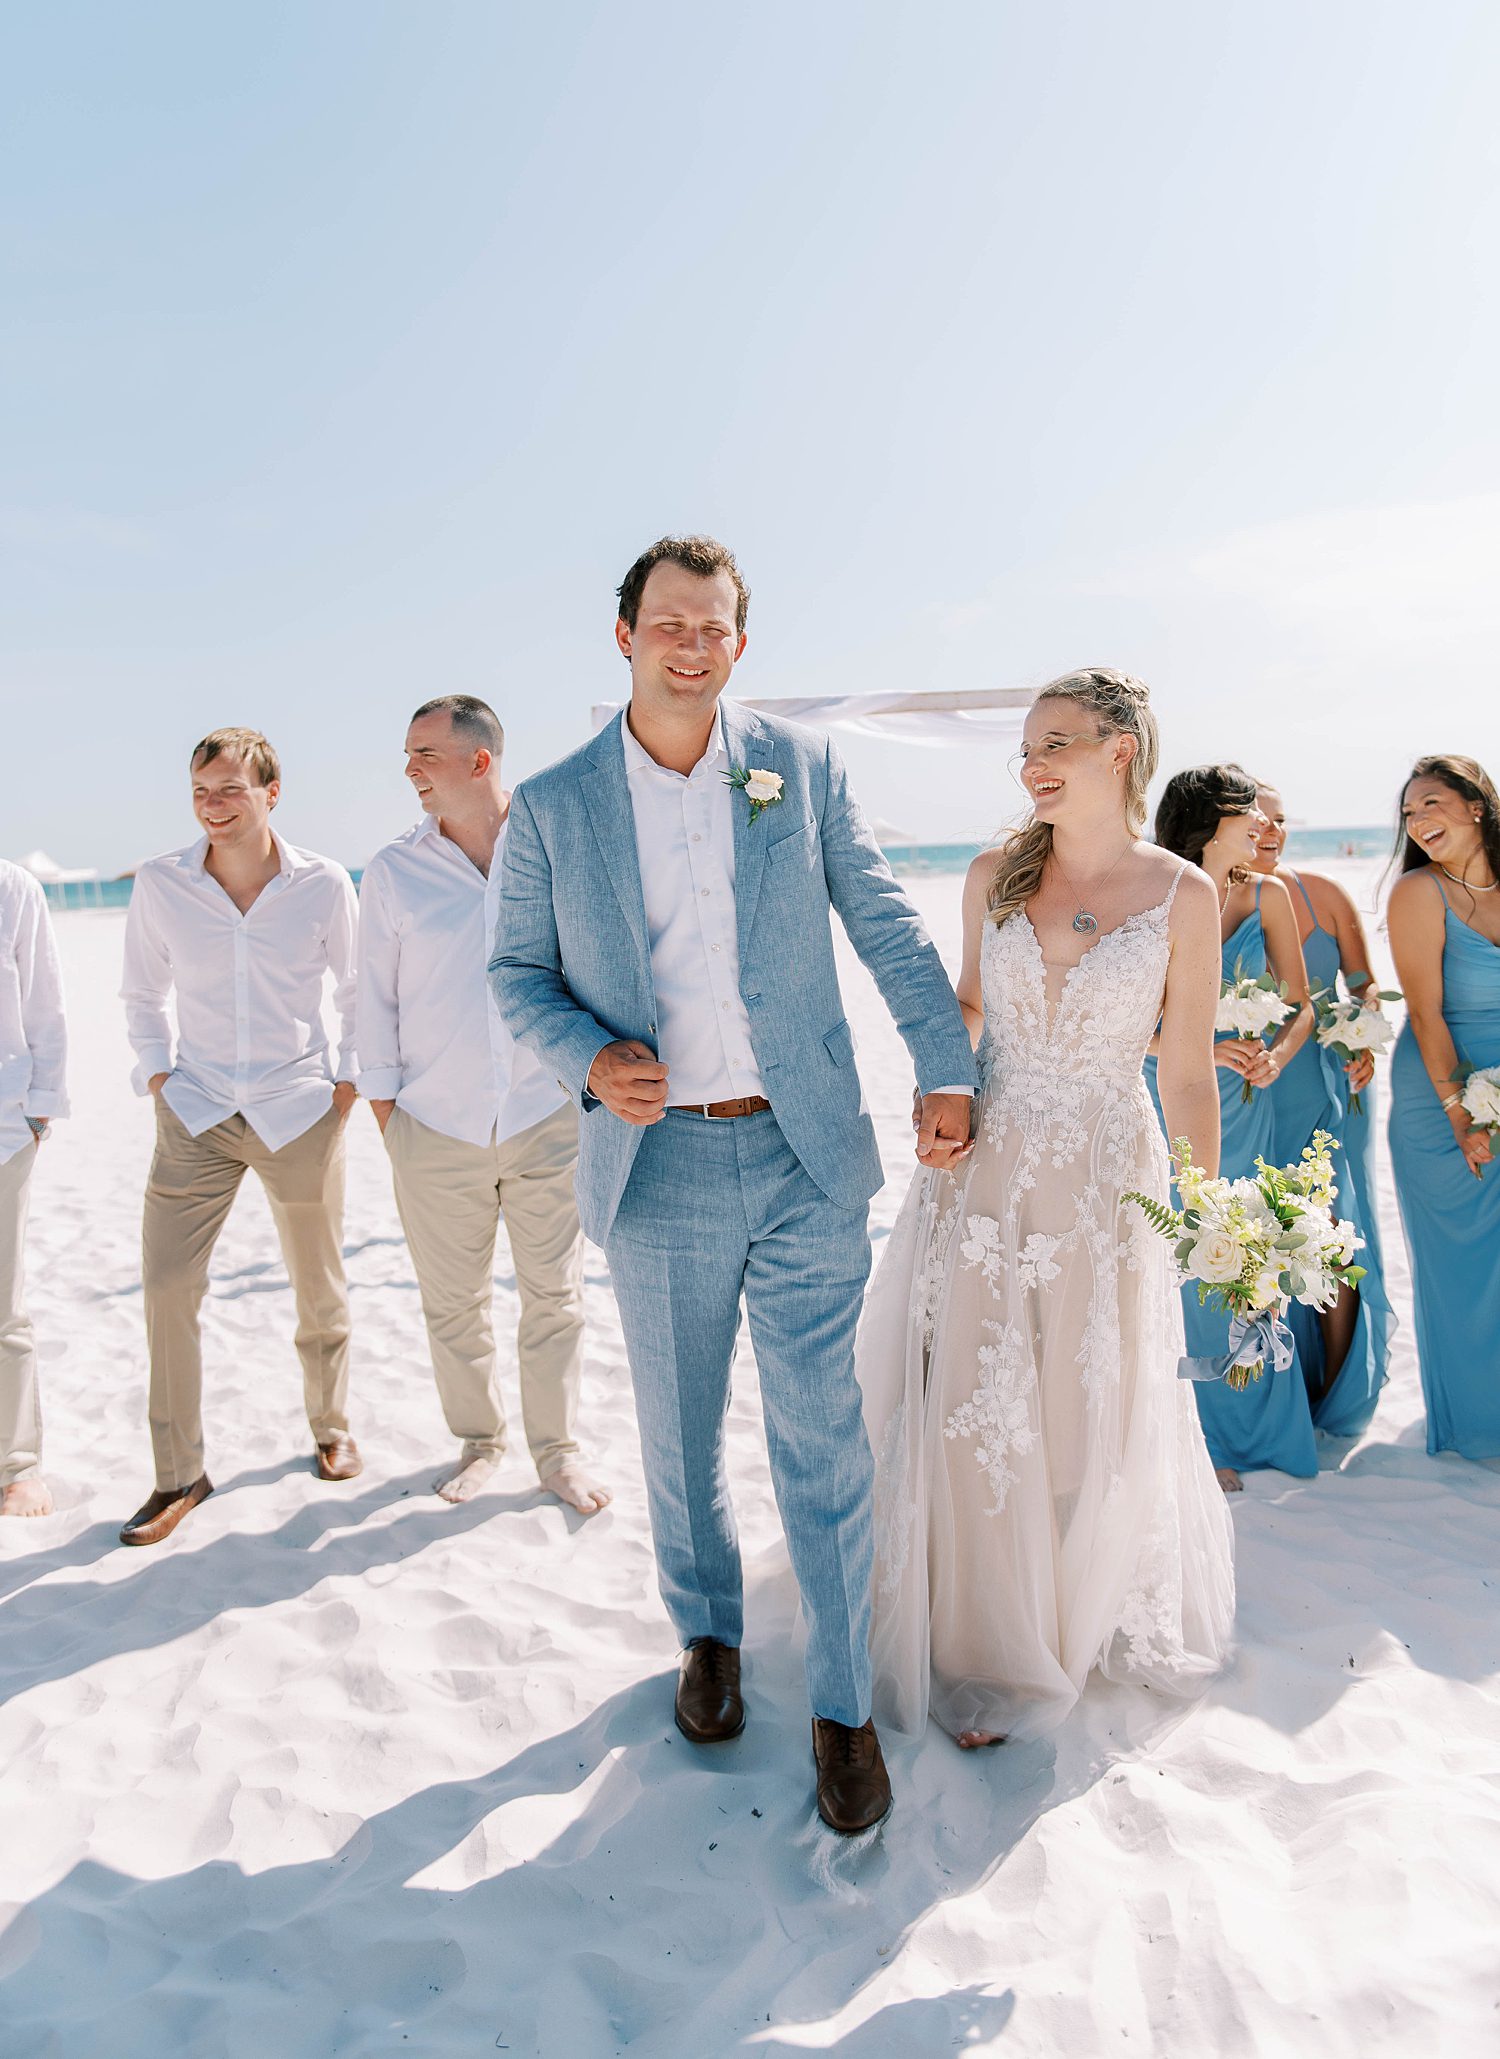 newlyweds walk on beach with bridal party during beach wedding photos